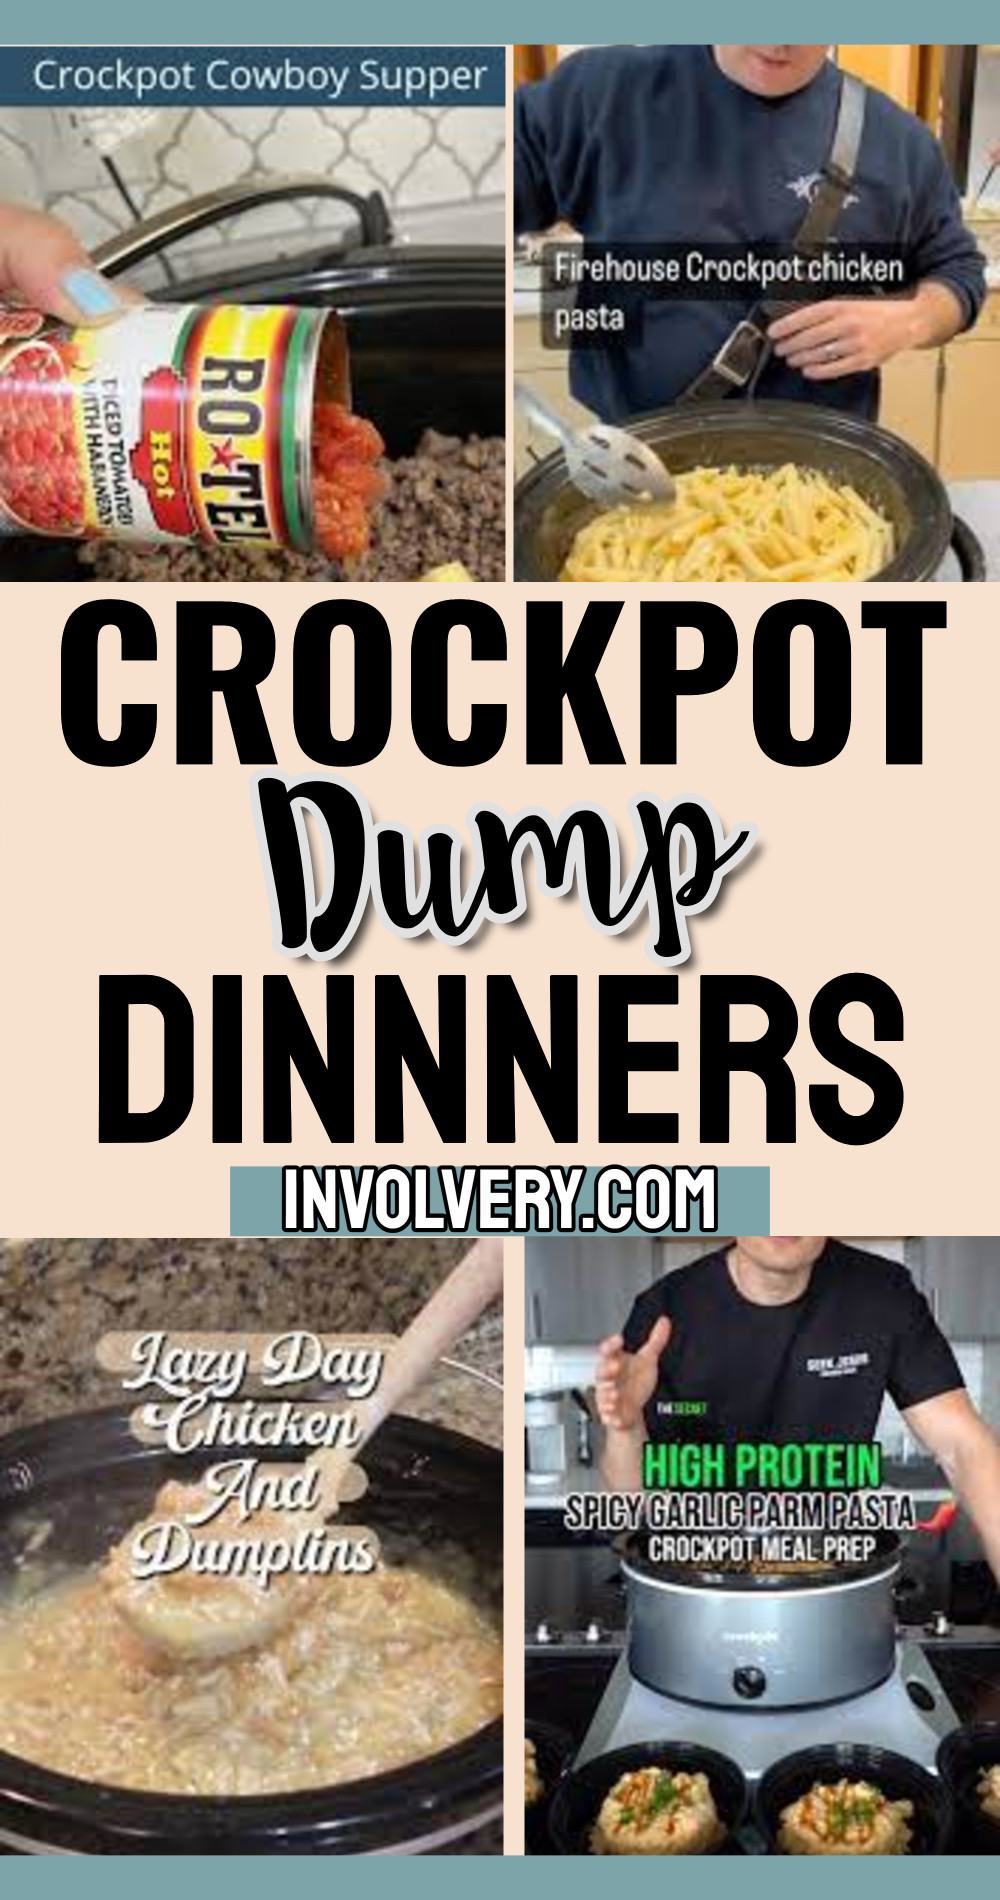 Crockpot Dump Dinners